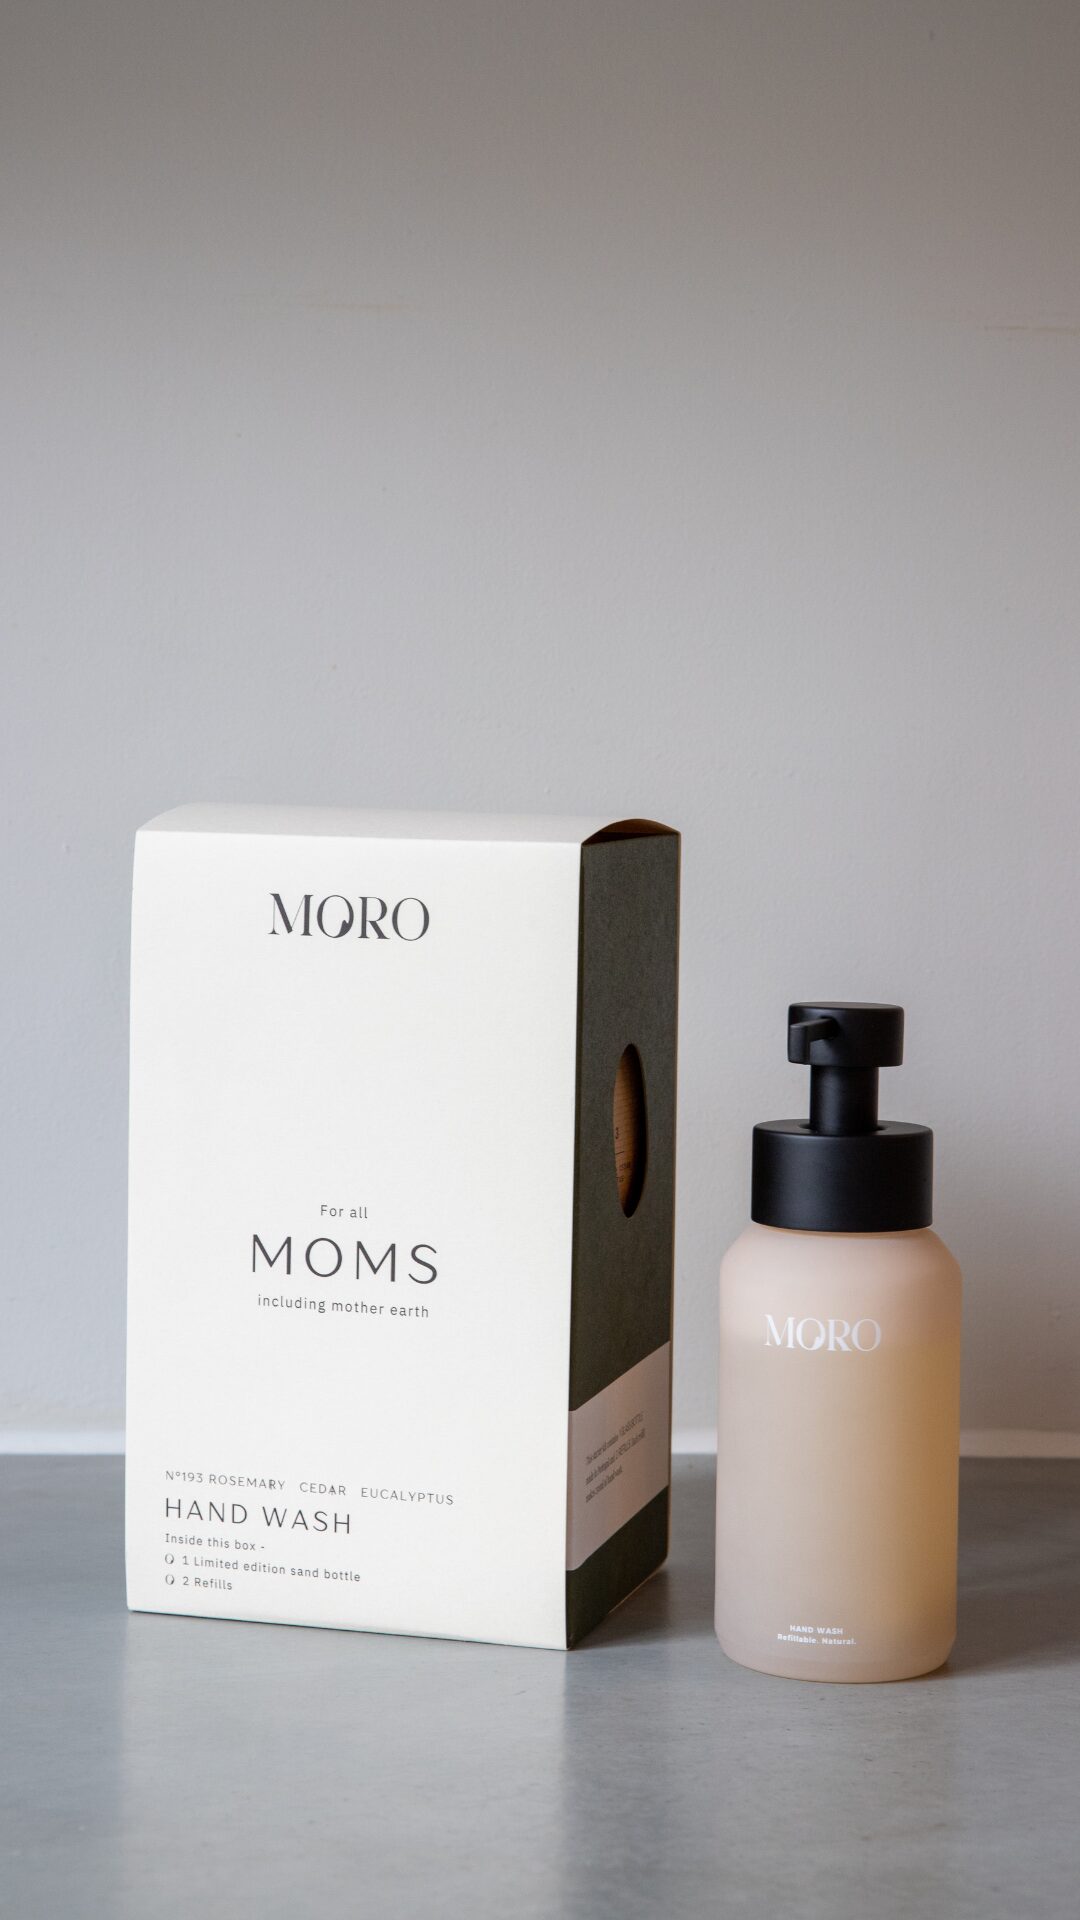 MORO Limited Edition Moederdag Box - Handwash